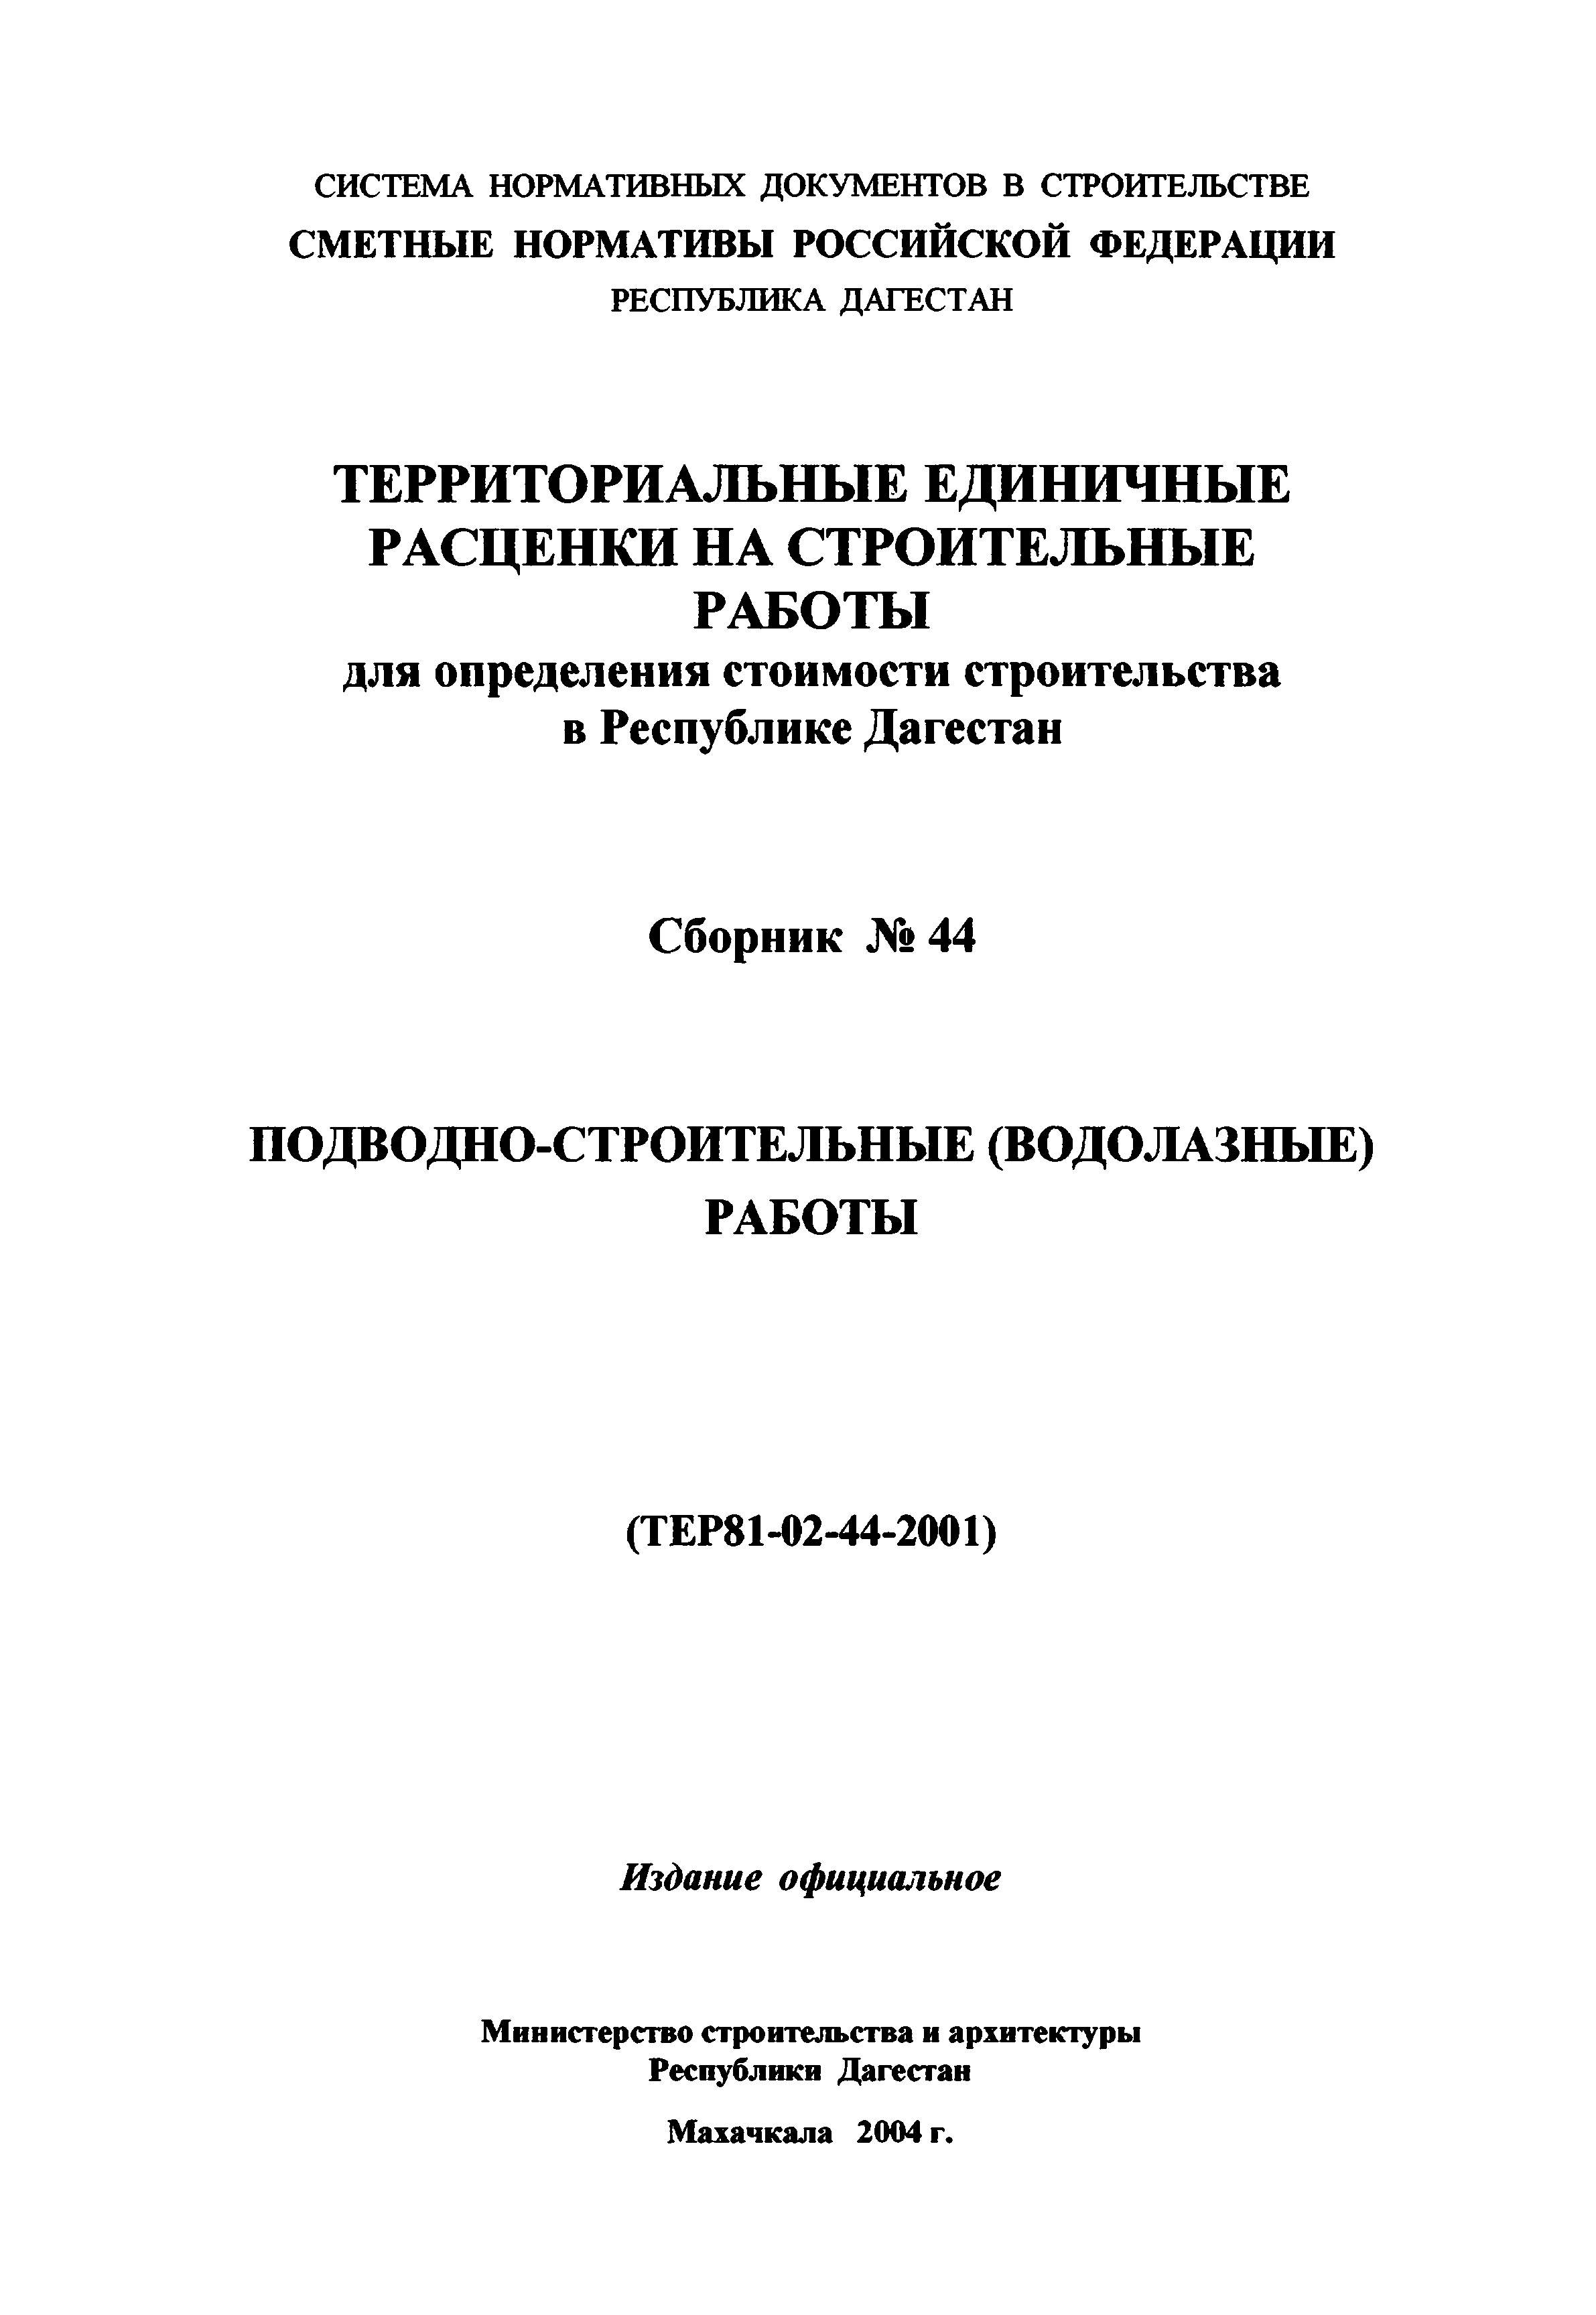 ТЕР Республика Дагестан 2001-44